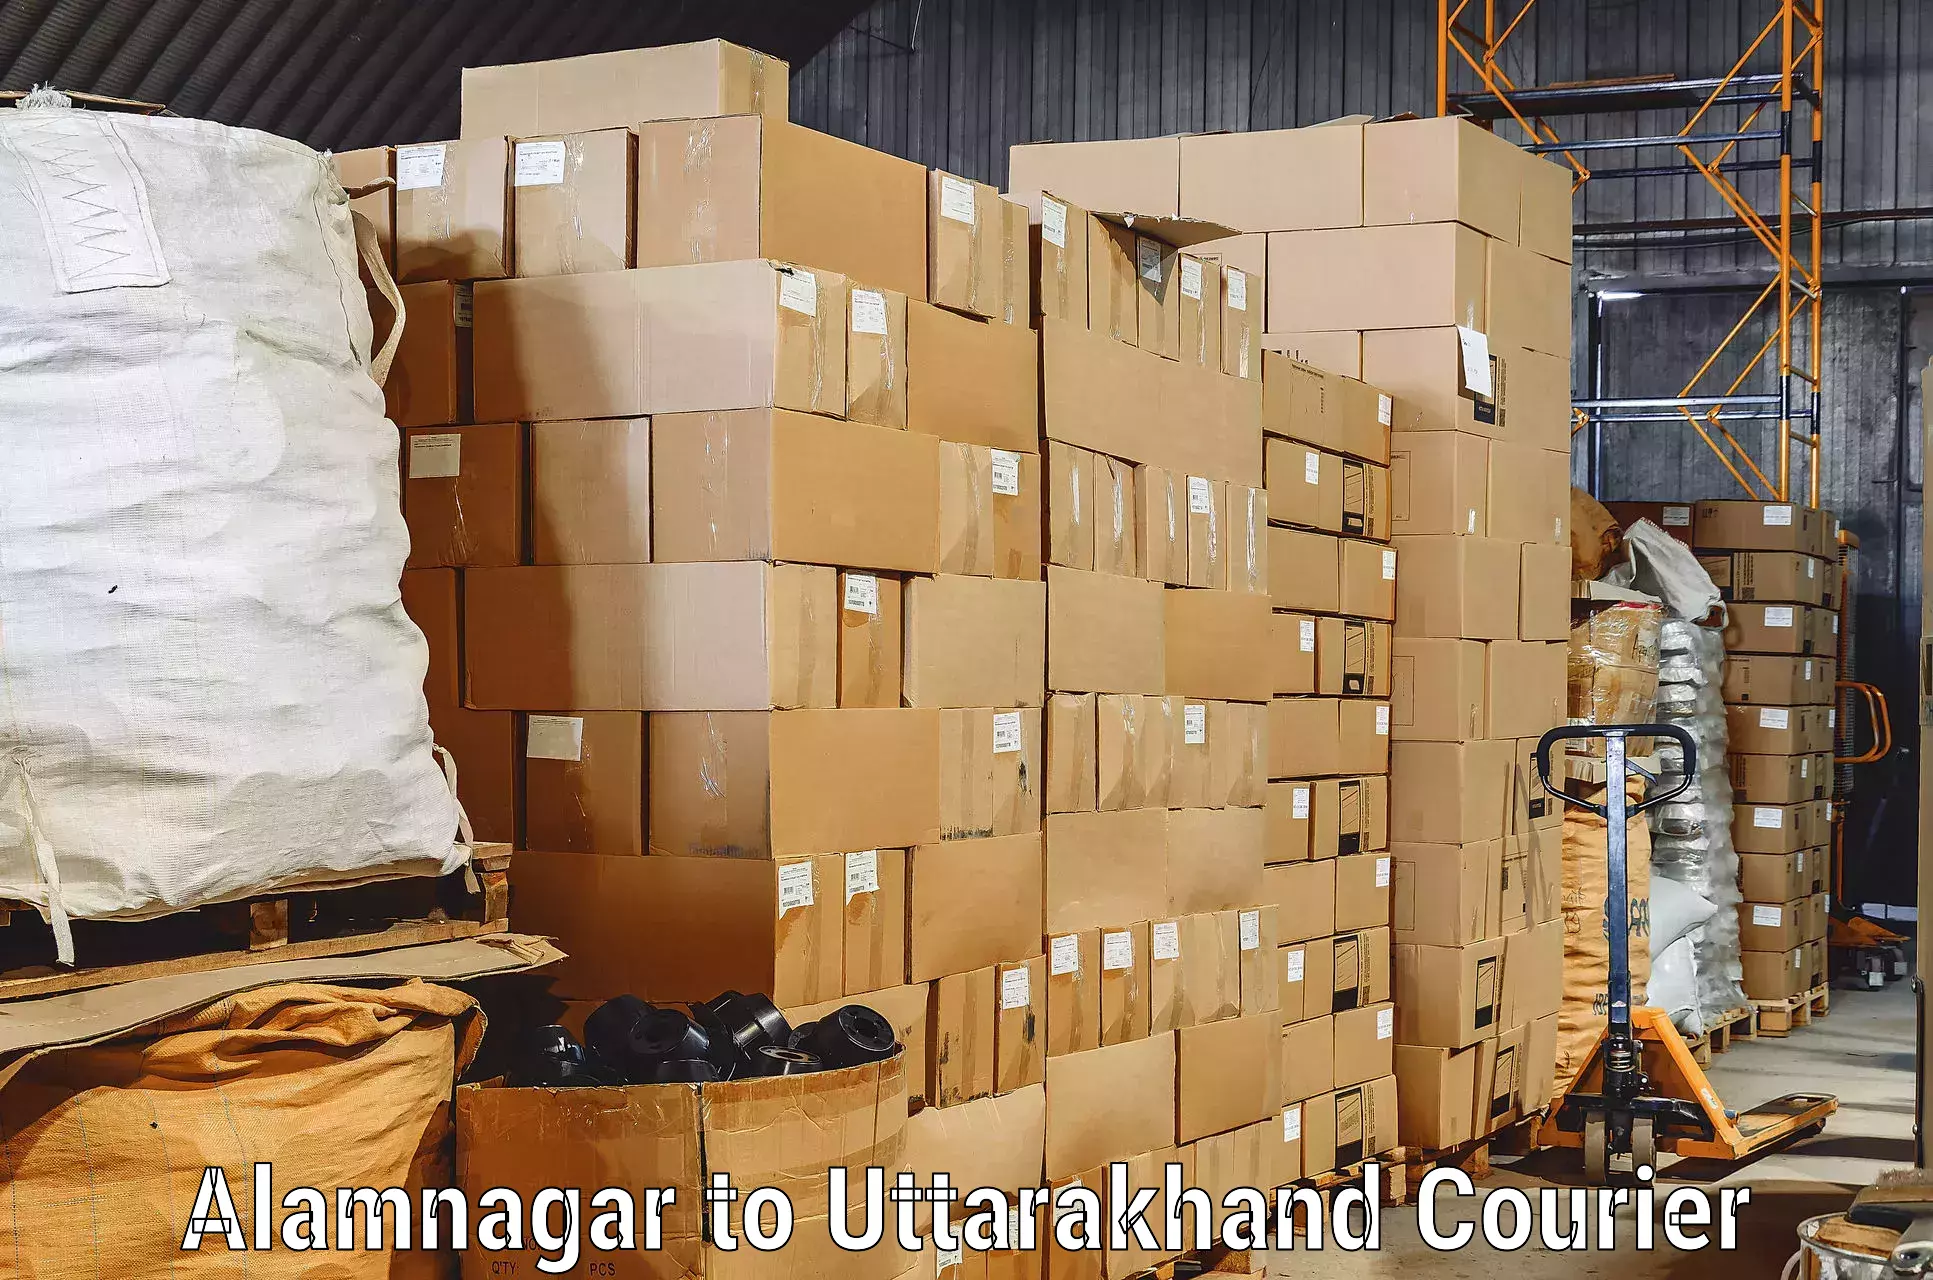 Trusted relocation experts Alamnagar to Rudraprayag